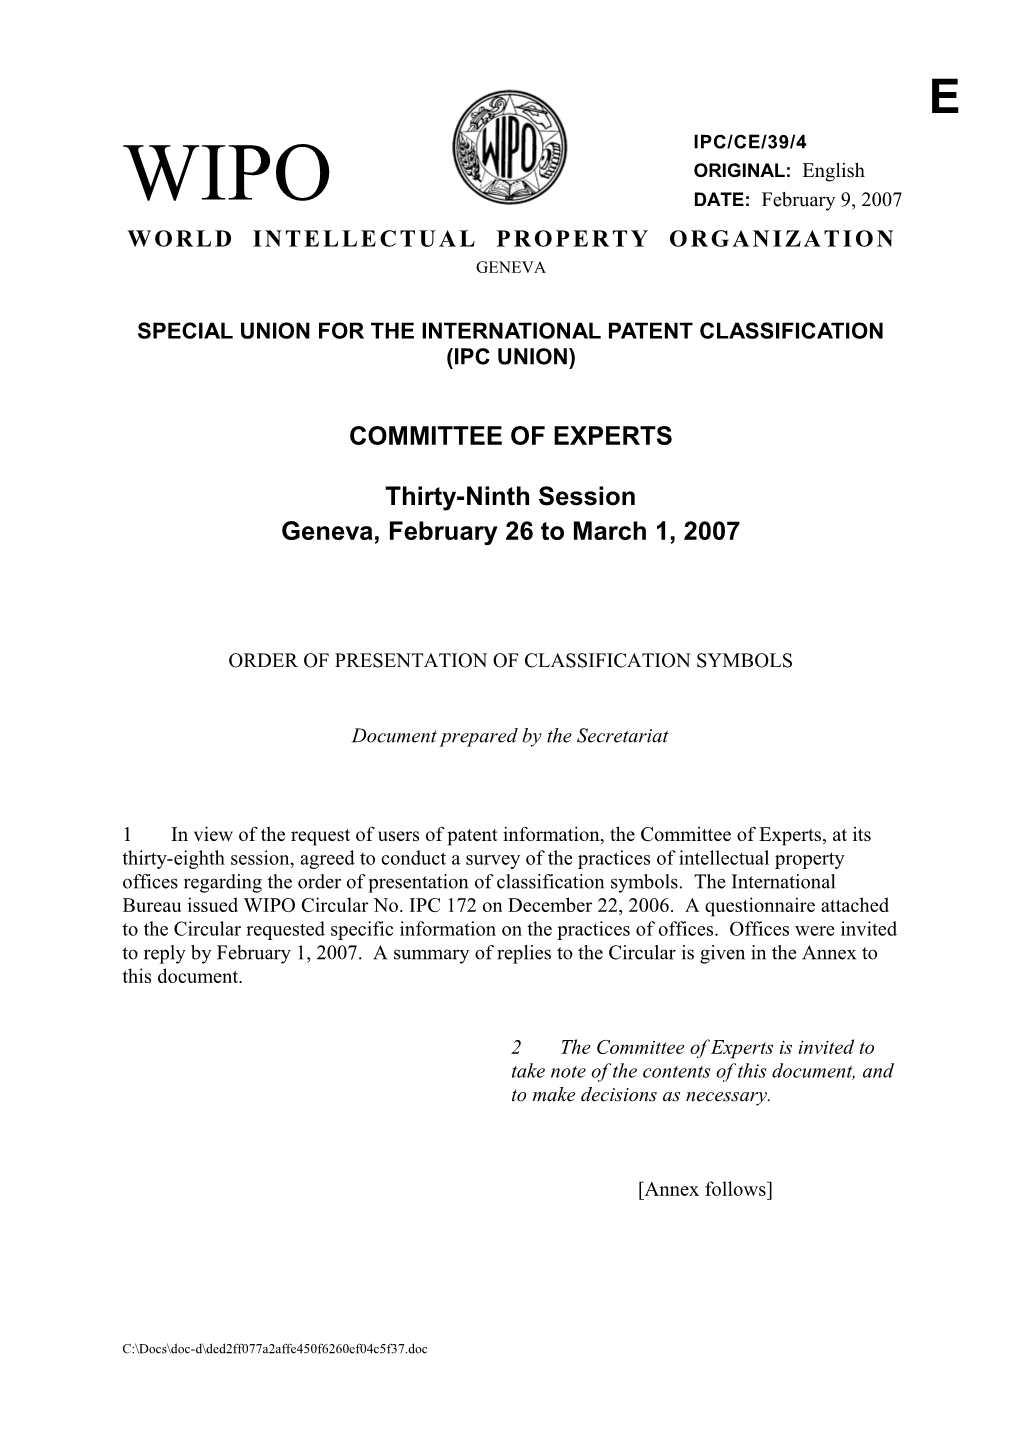 IPC/CE/39/4: Order of Presentation of Classification Symbols